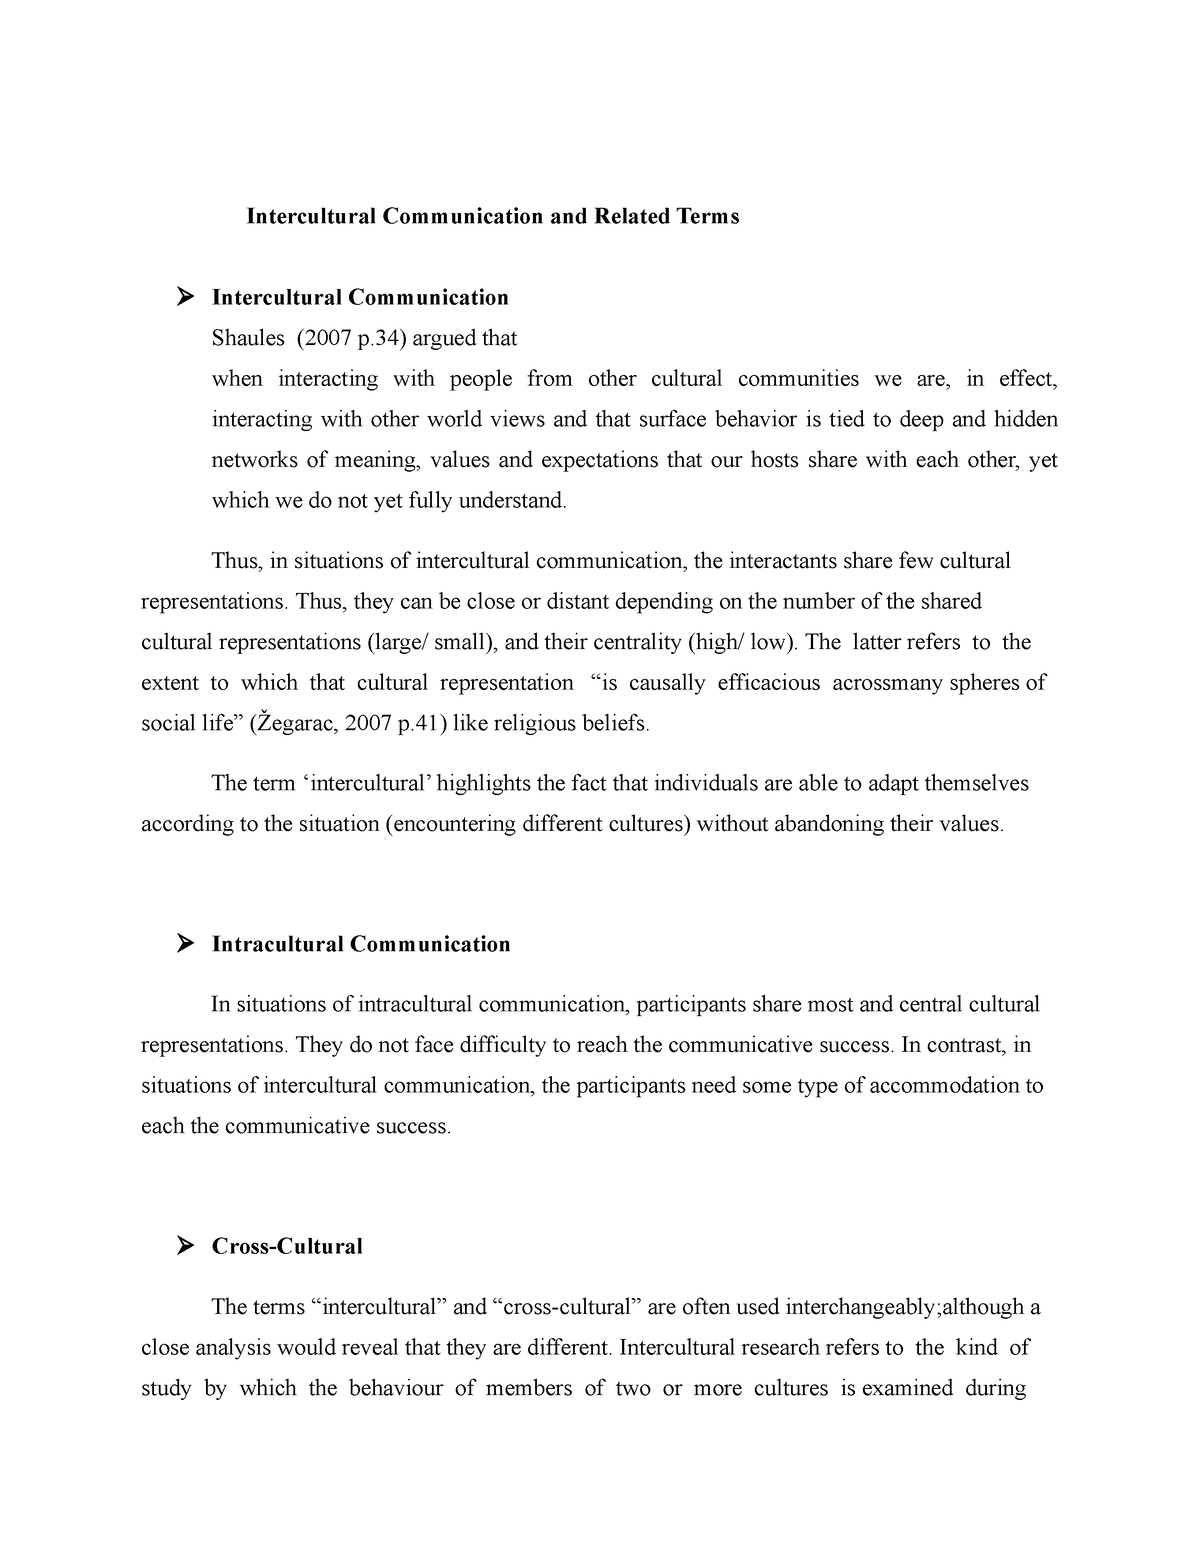 intercultural communication dissertation